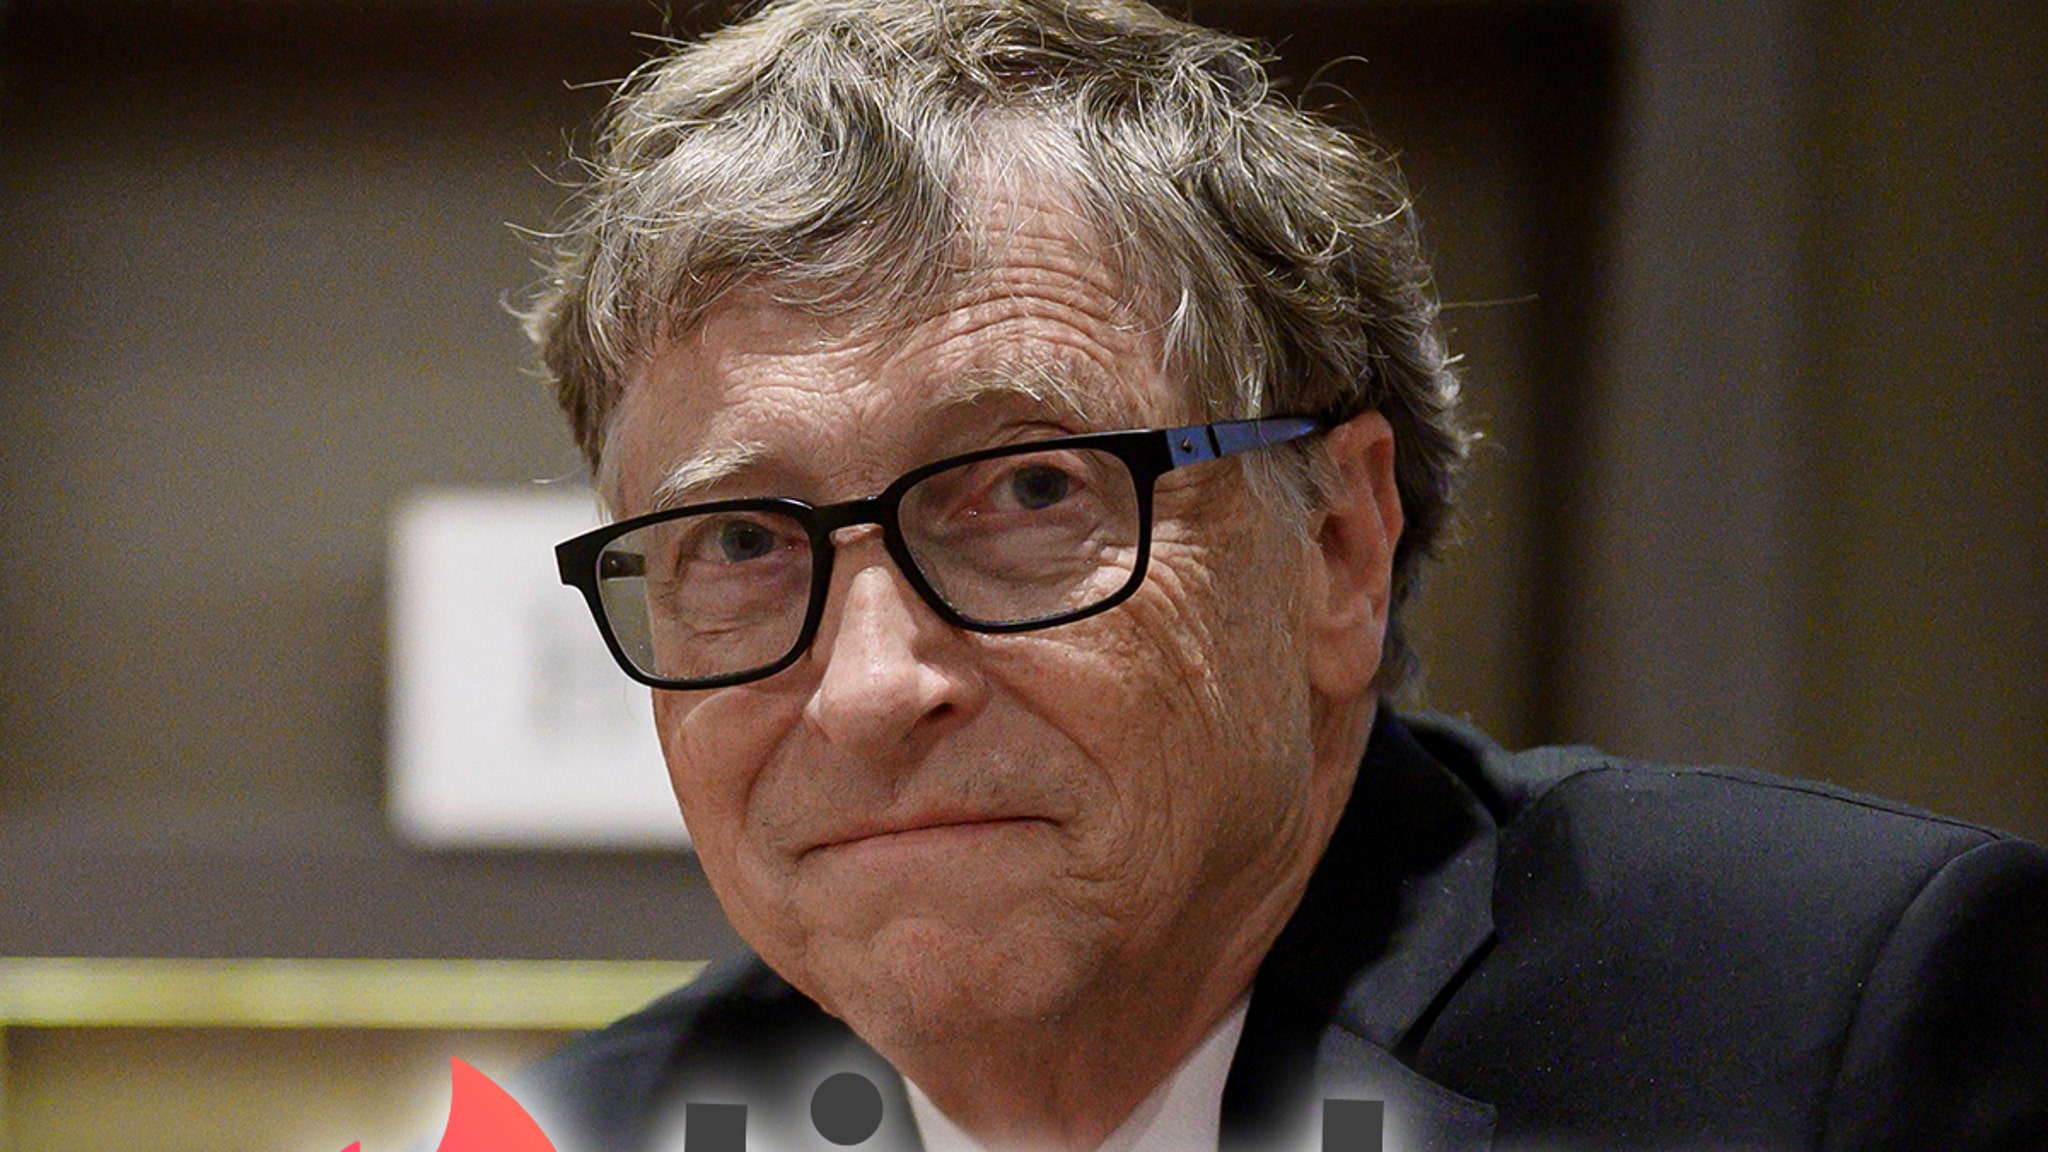 Bill Gates Catfishers Stand No Chance on Tinder Amid His Divorce - TMZ